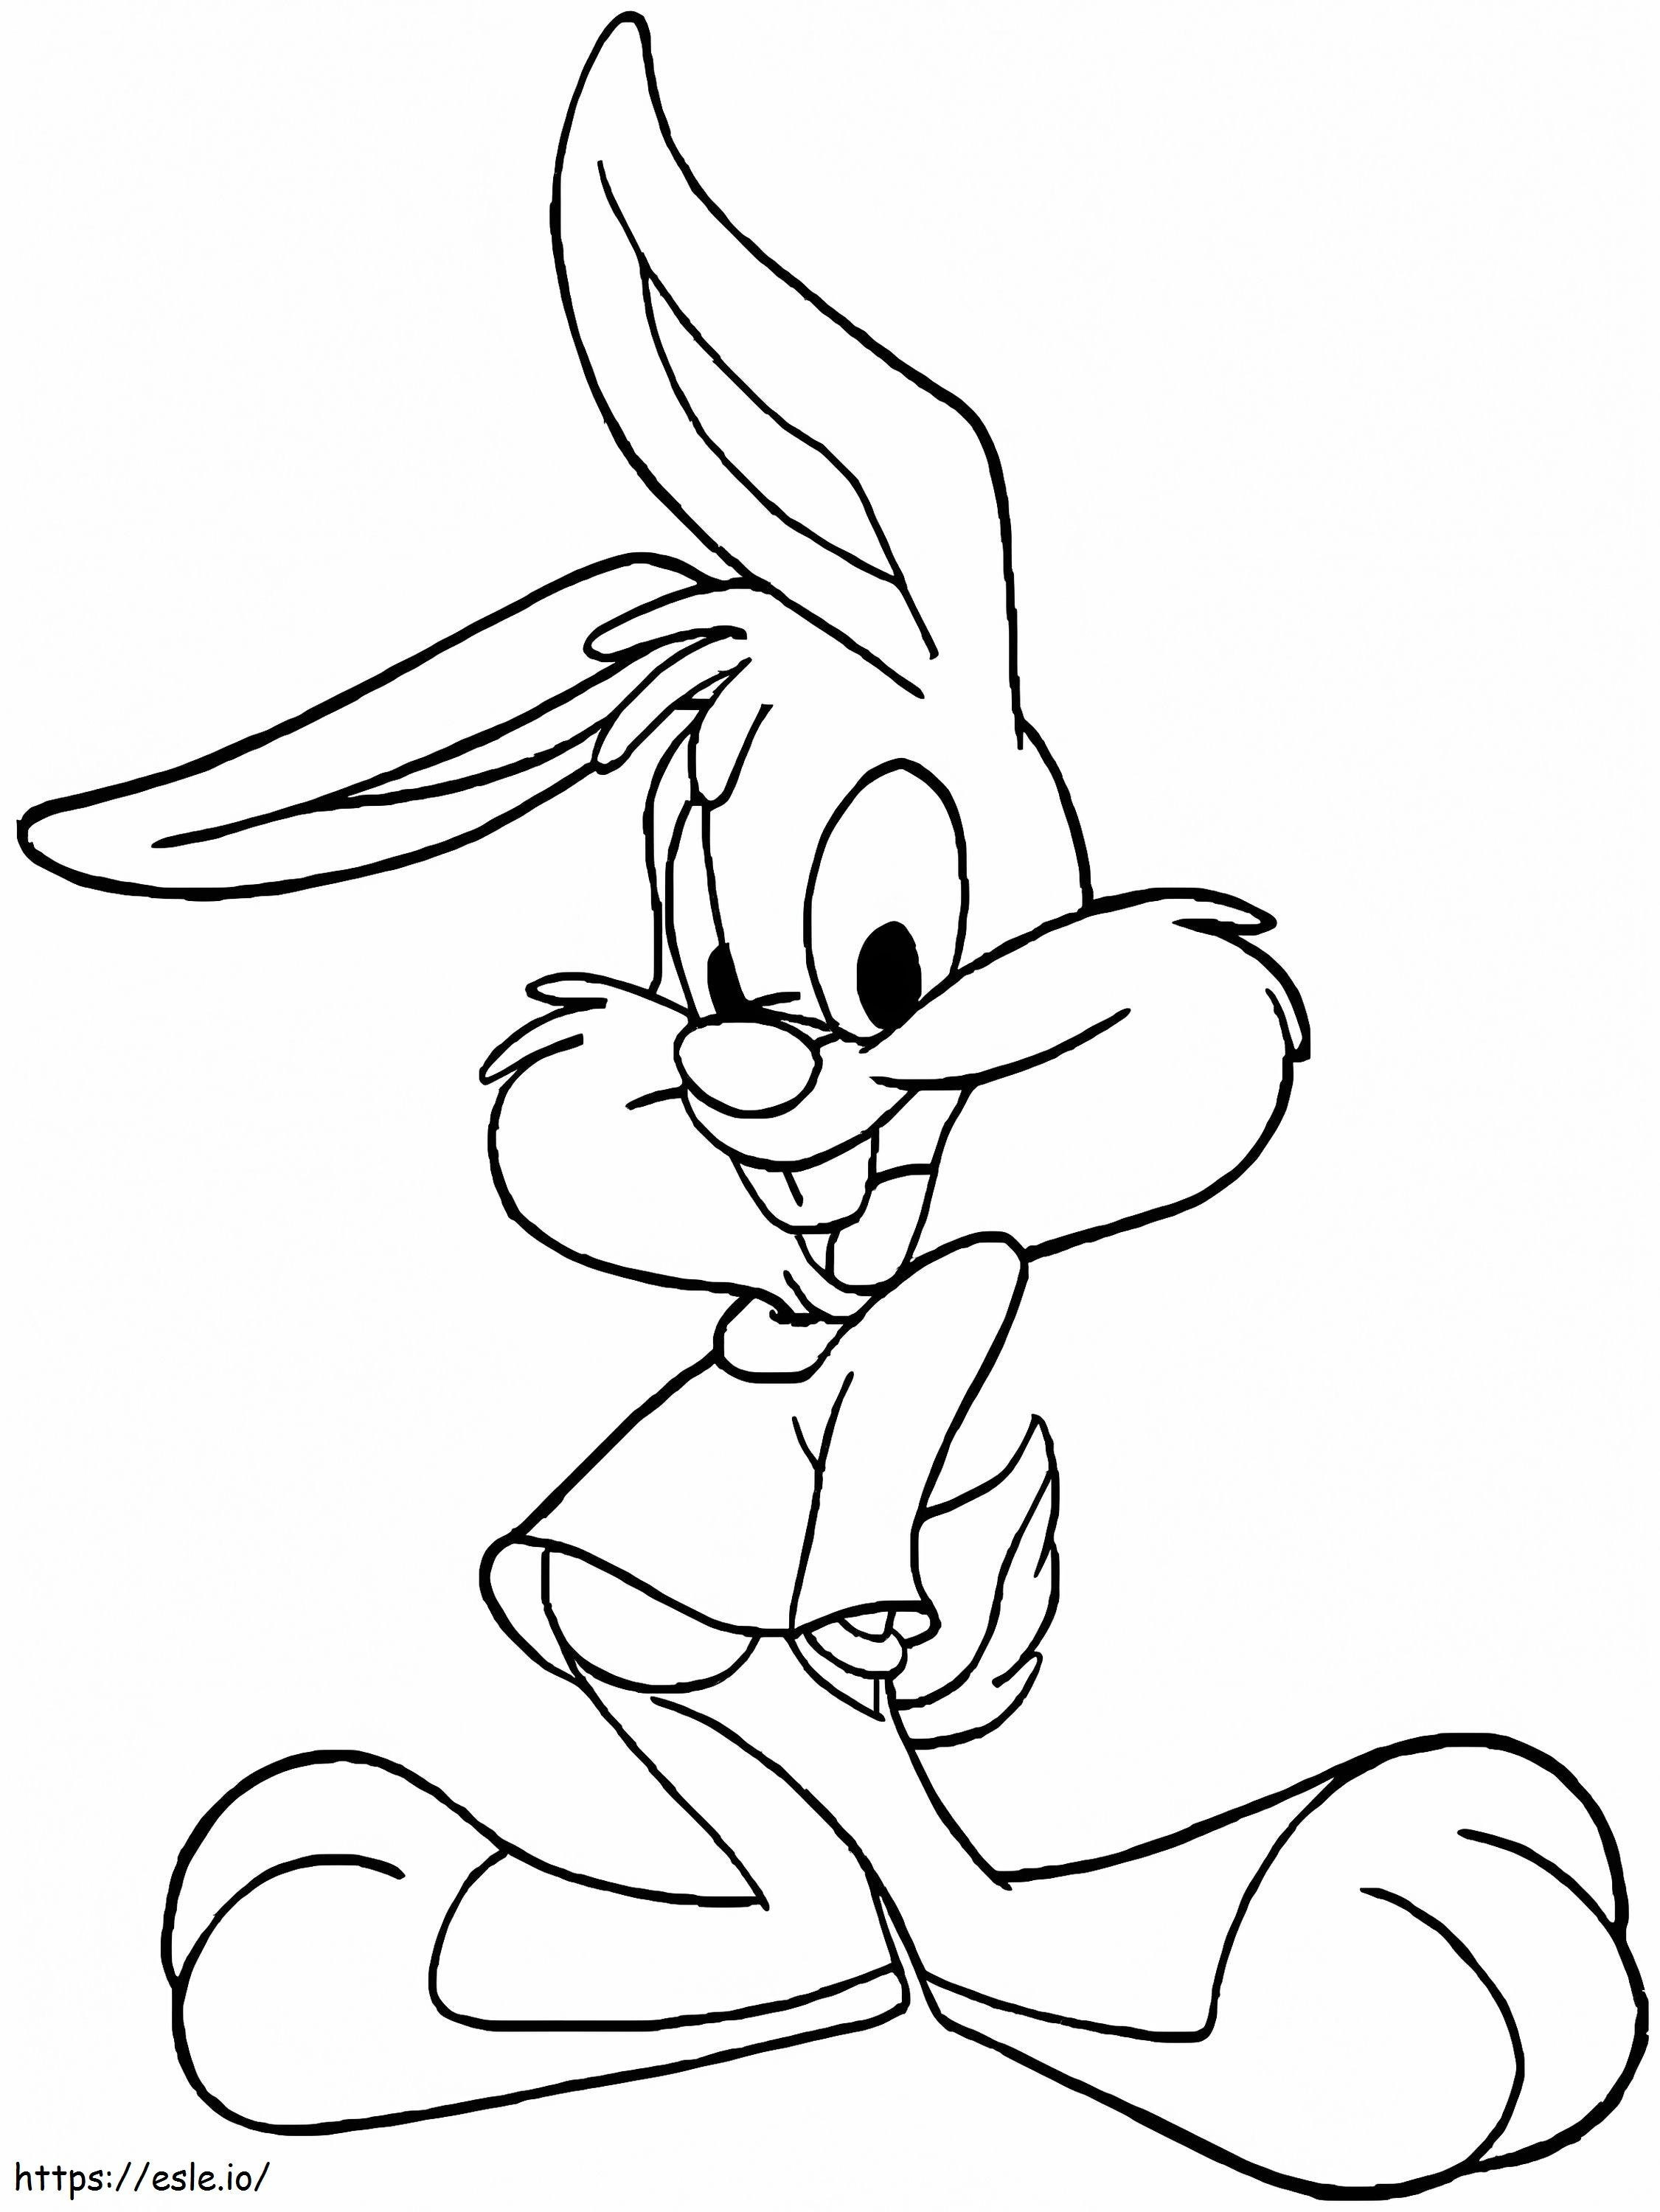 Coloriage Buster Bunny de Tiny Toon Adventures à imprimer dessin